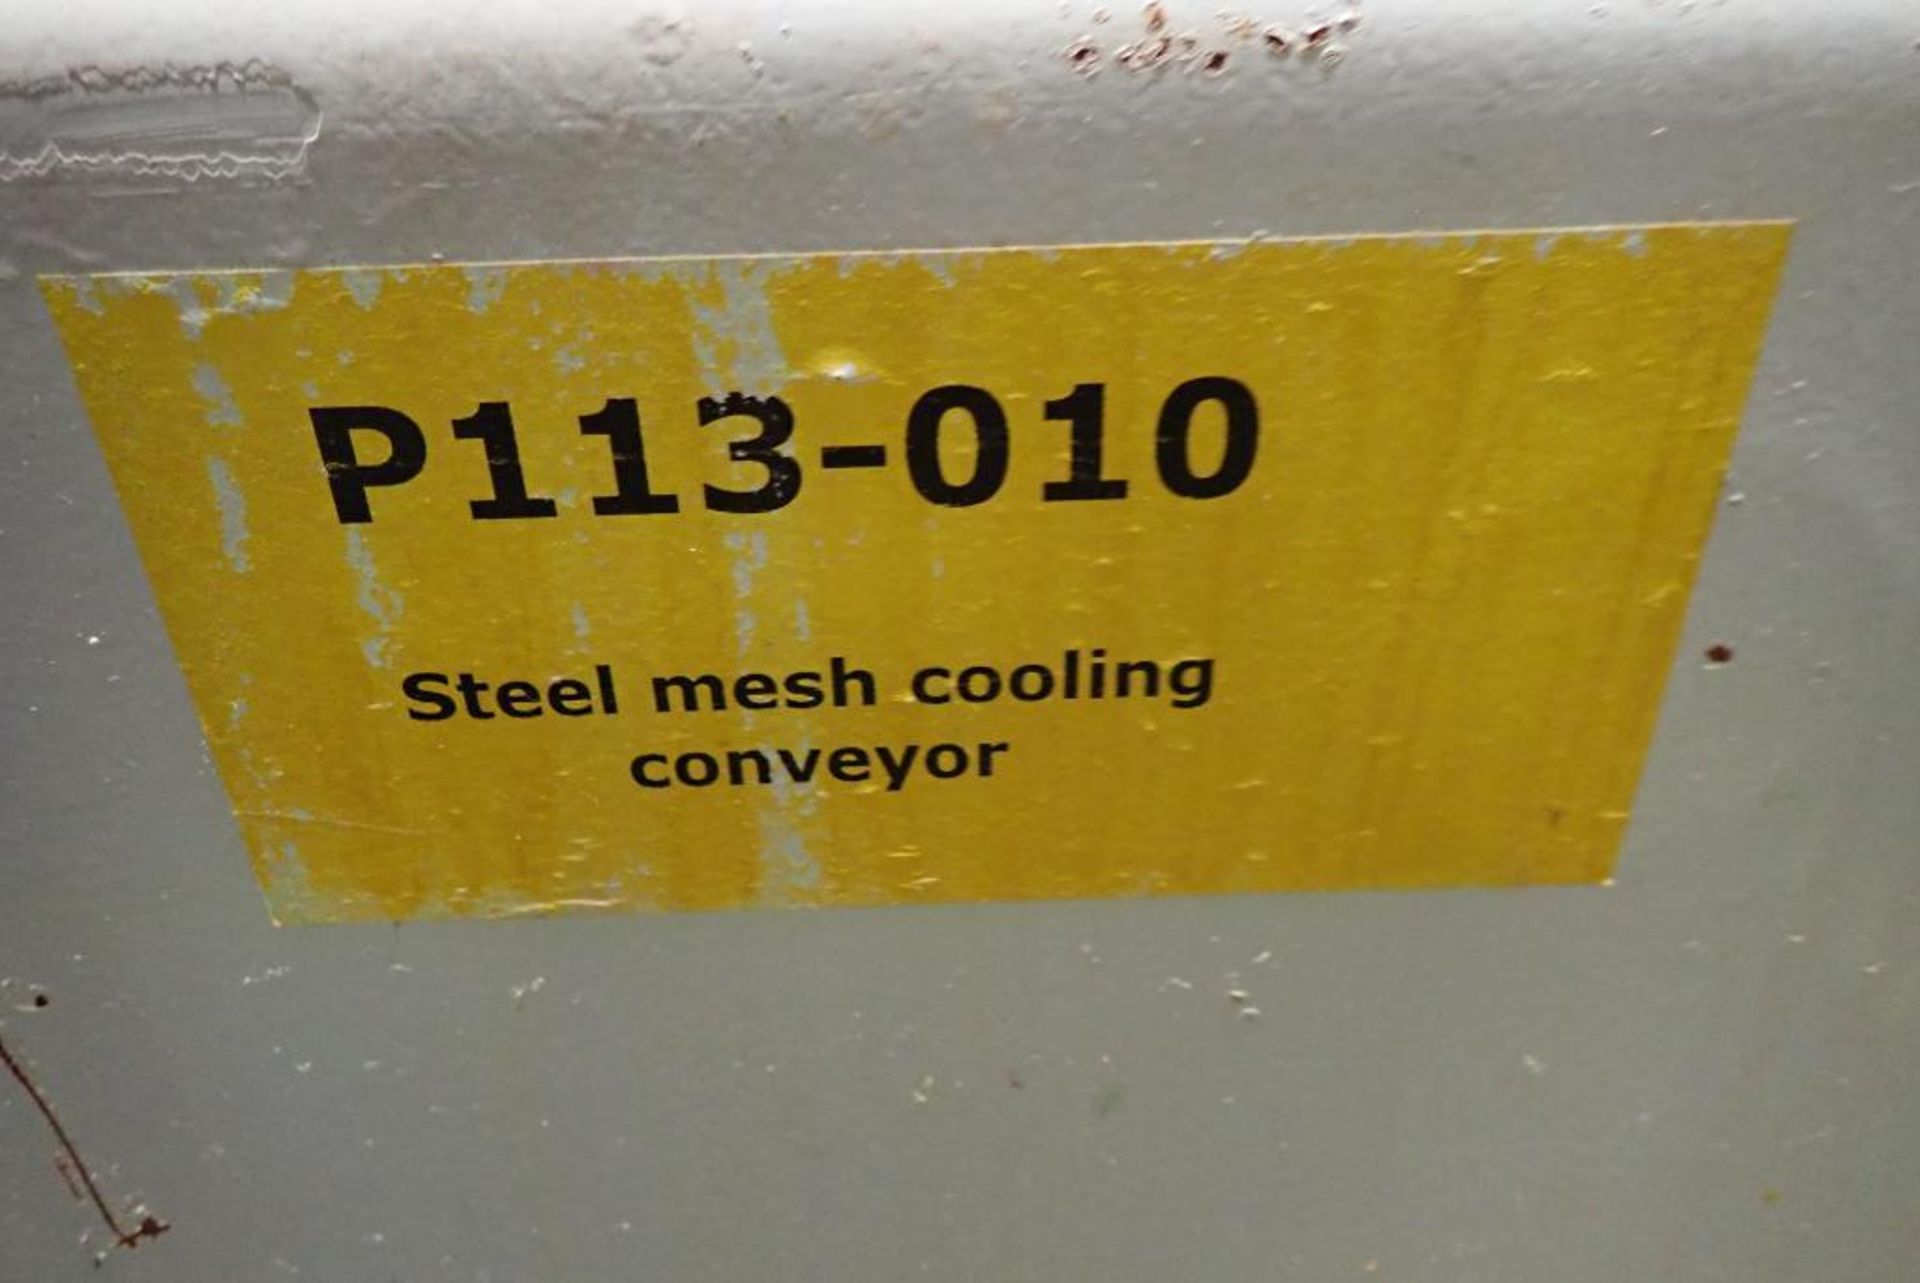 Werner Lehara cooling conveyor - Image 10 of 10